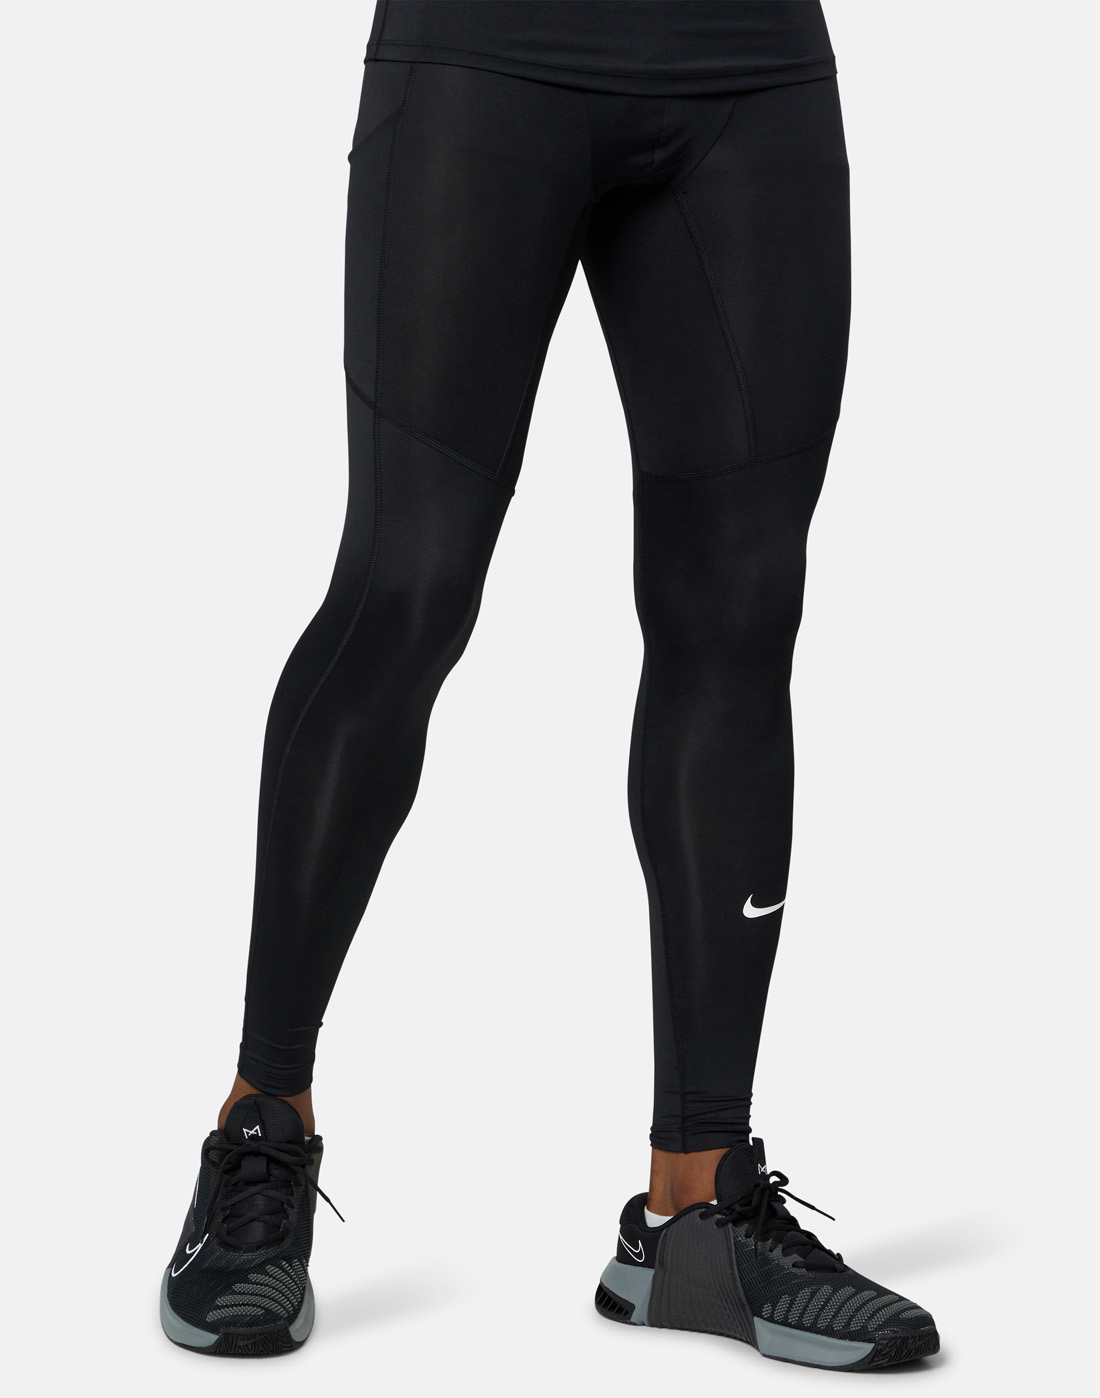 Nike Mens Pro Base Training Tights - Black